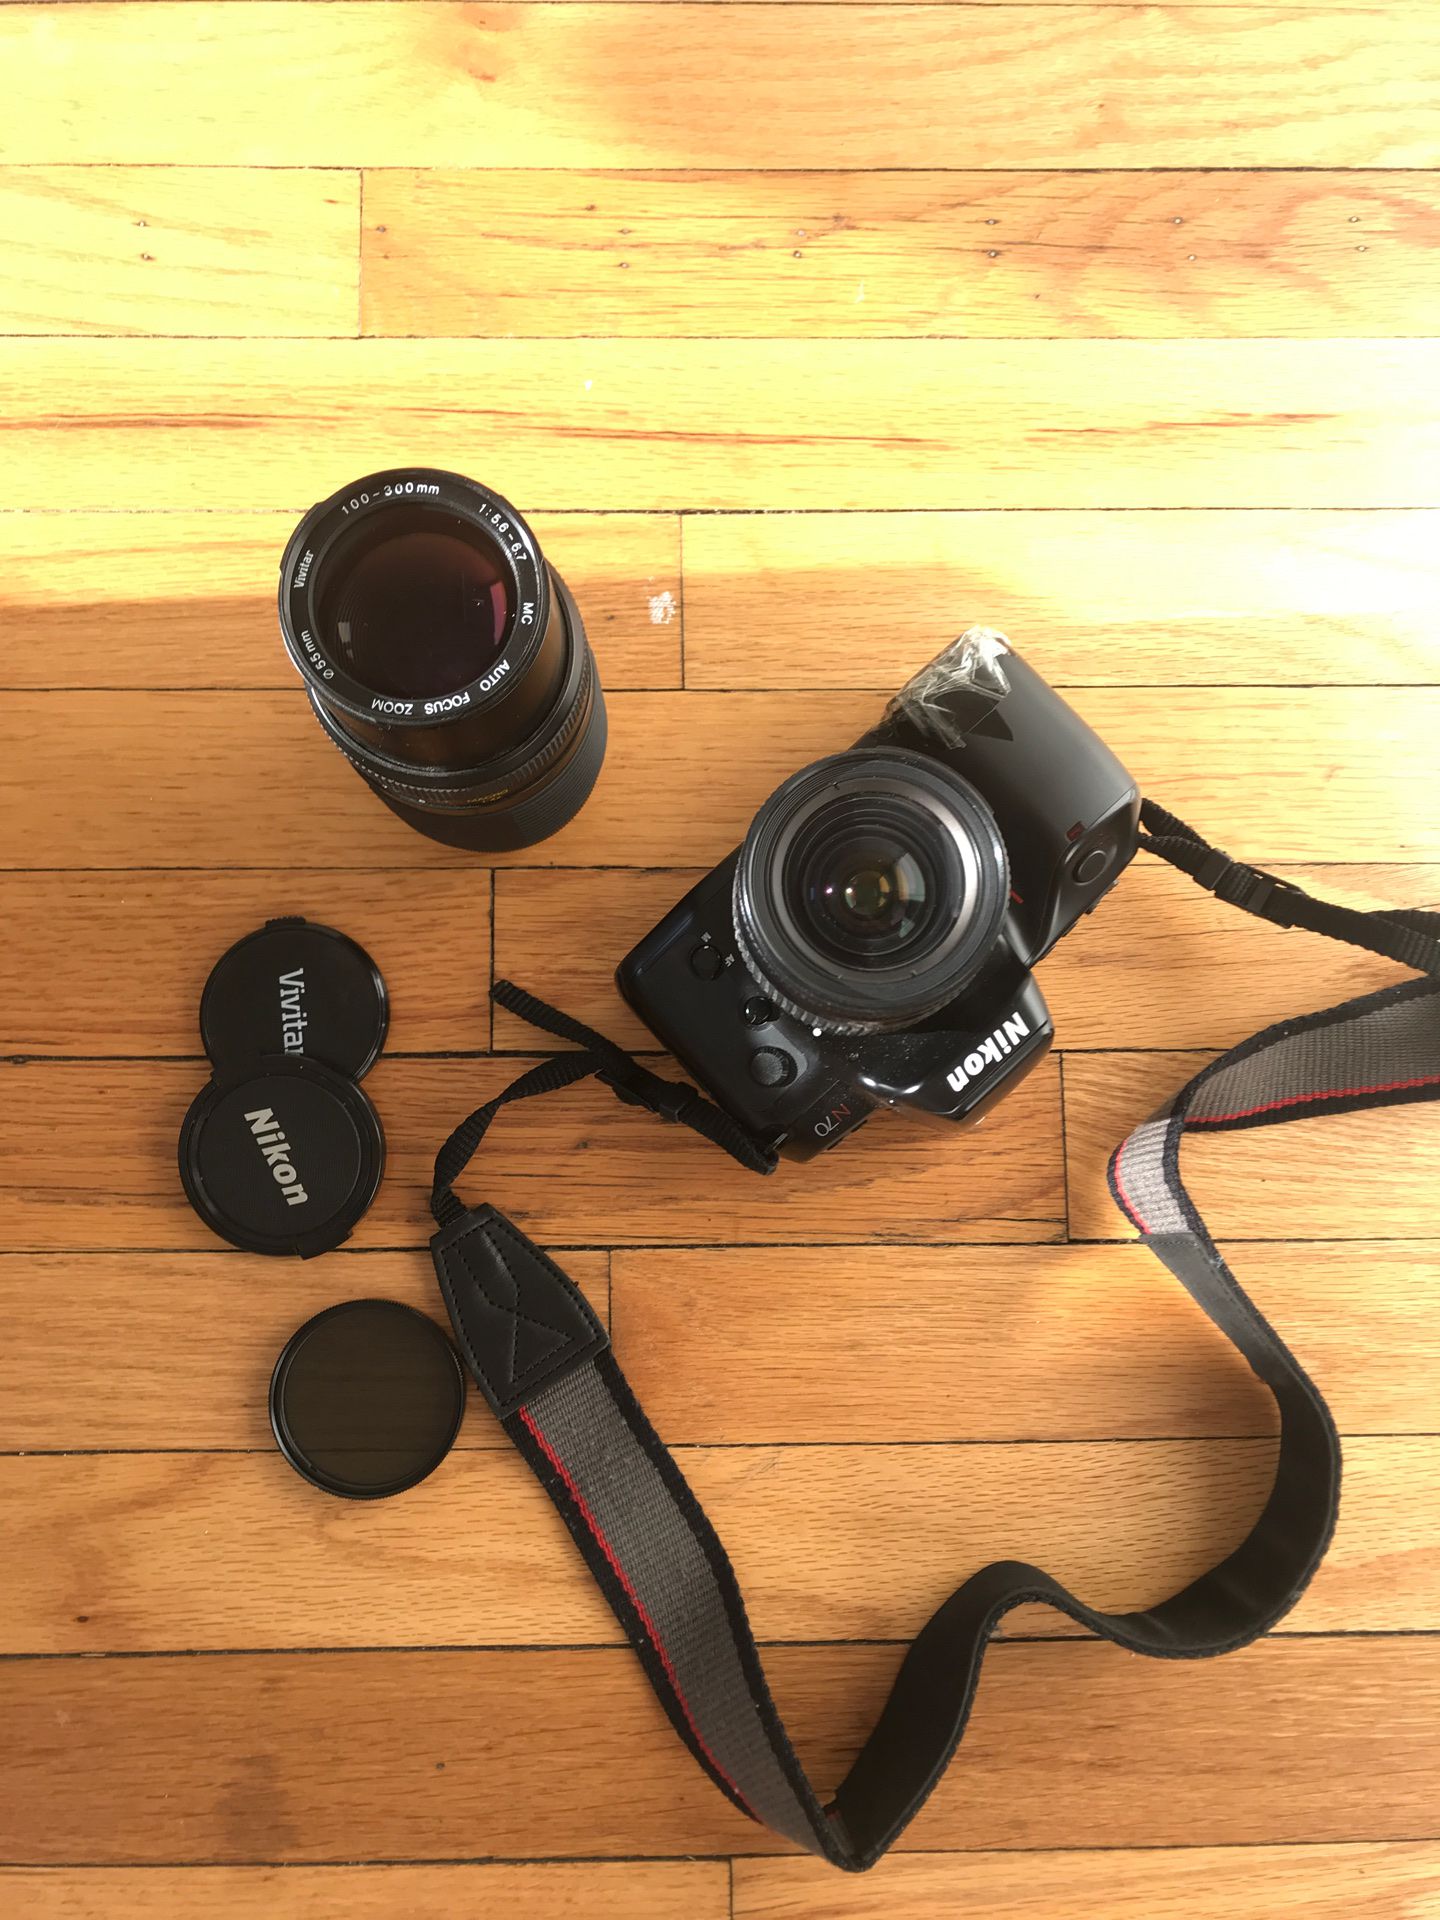 Nikon n70 Film camera, 2 j carry cases (35mm SLR)